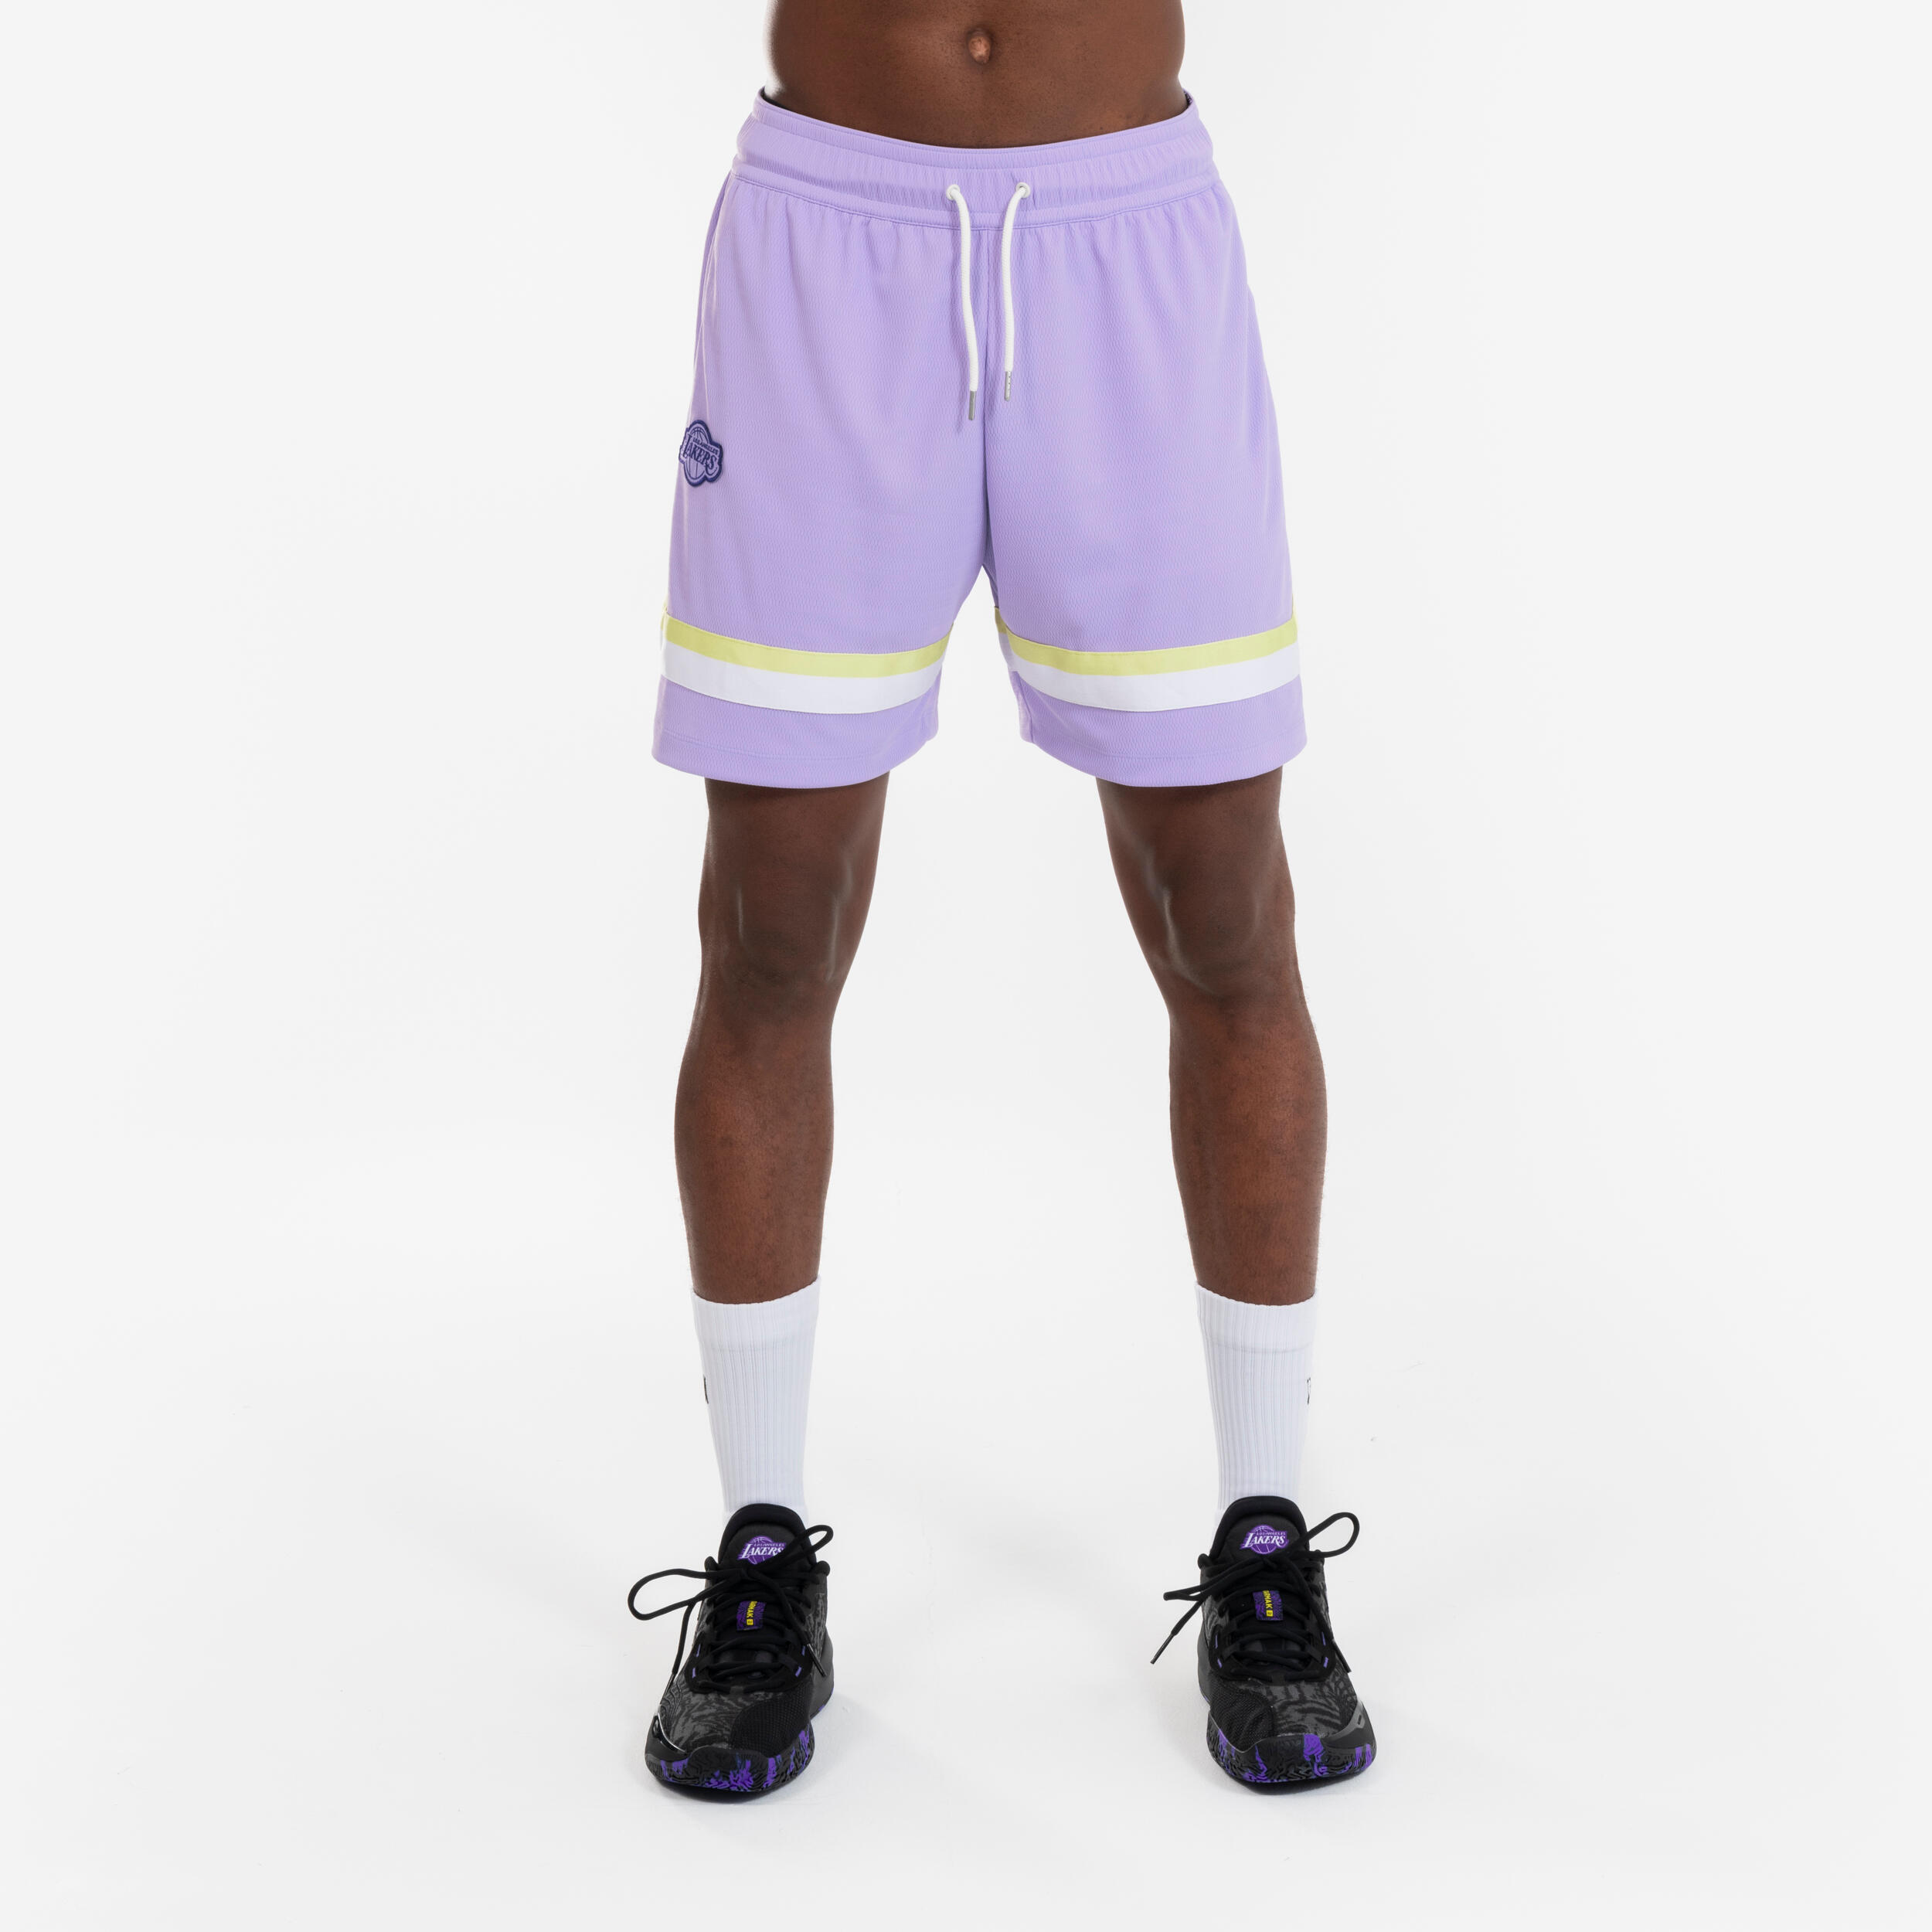 Men's/Women's Basketball Shorts SH 900 NBA Lakers - Purple 1/6